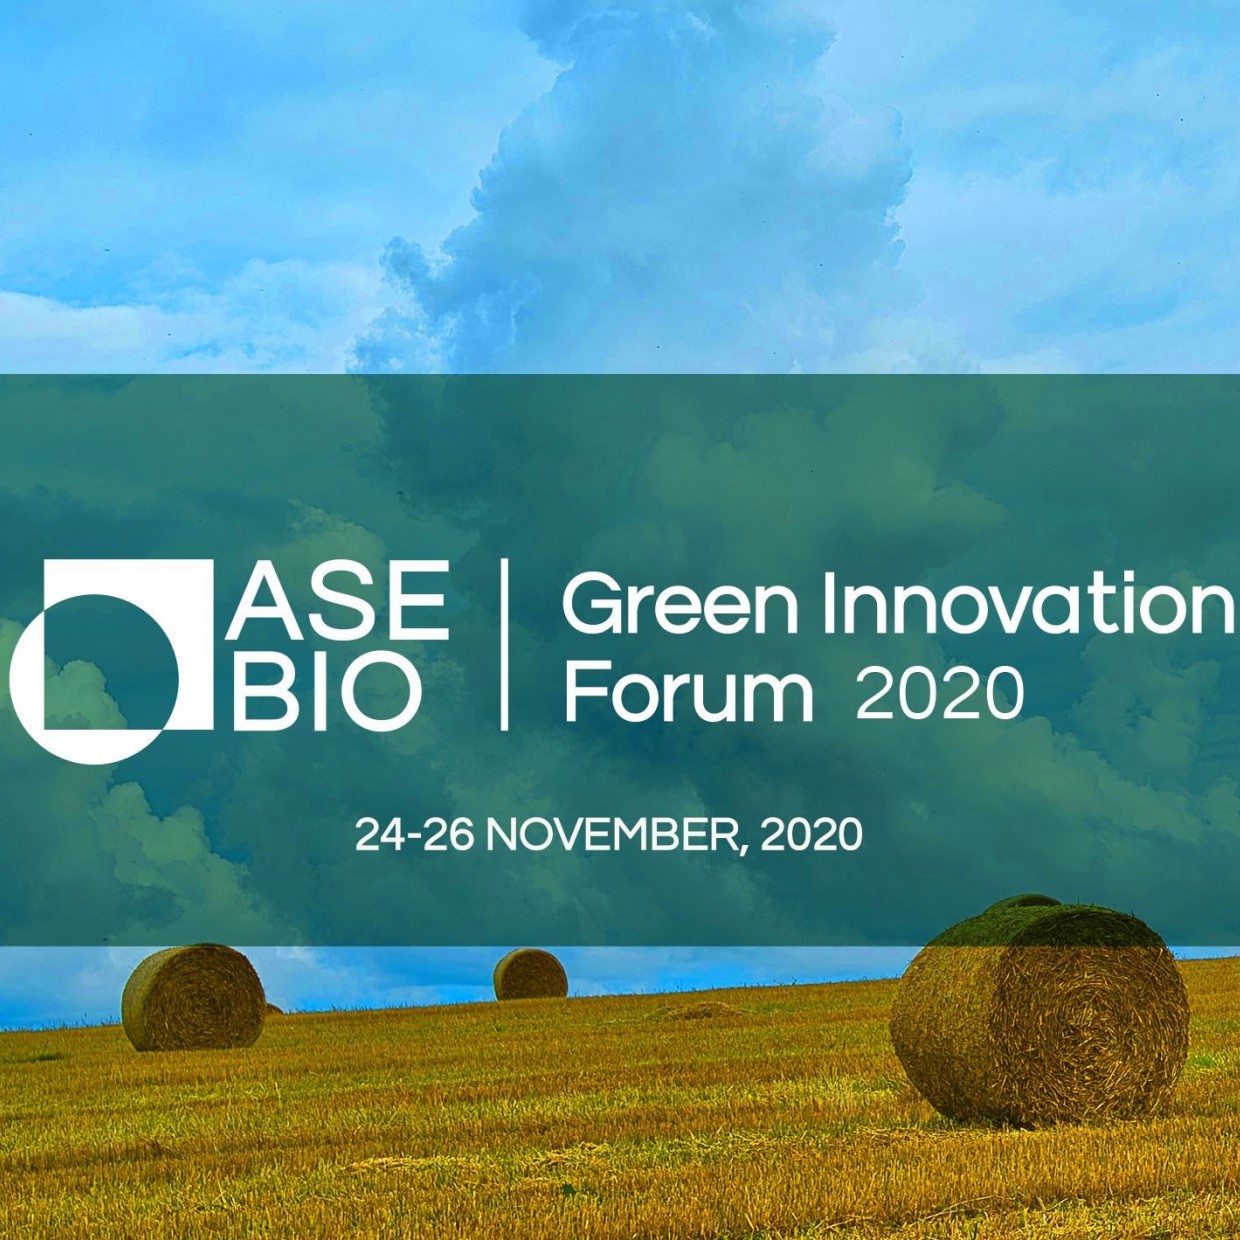 AlgaEnergy, protagonist of AseBio's Green Innovation Forum